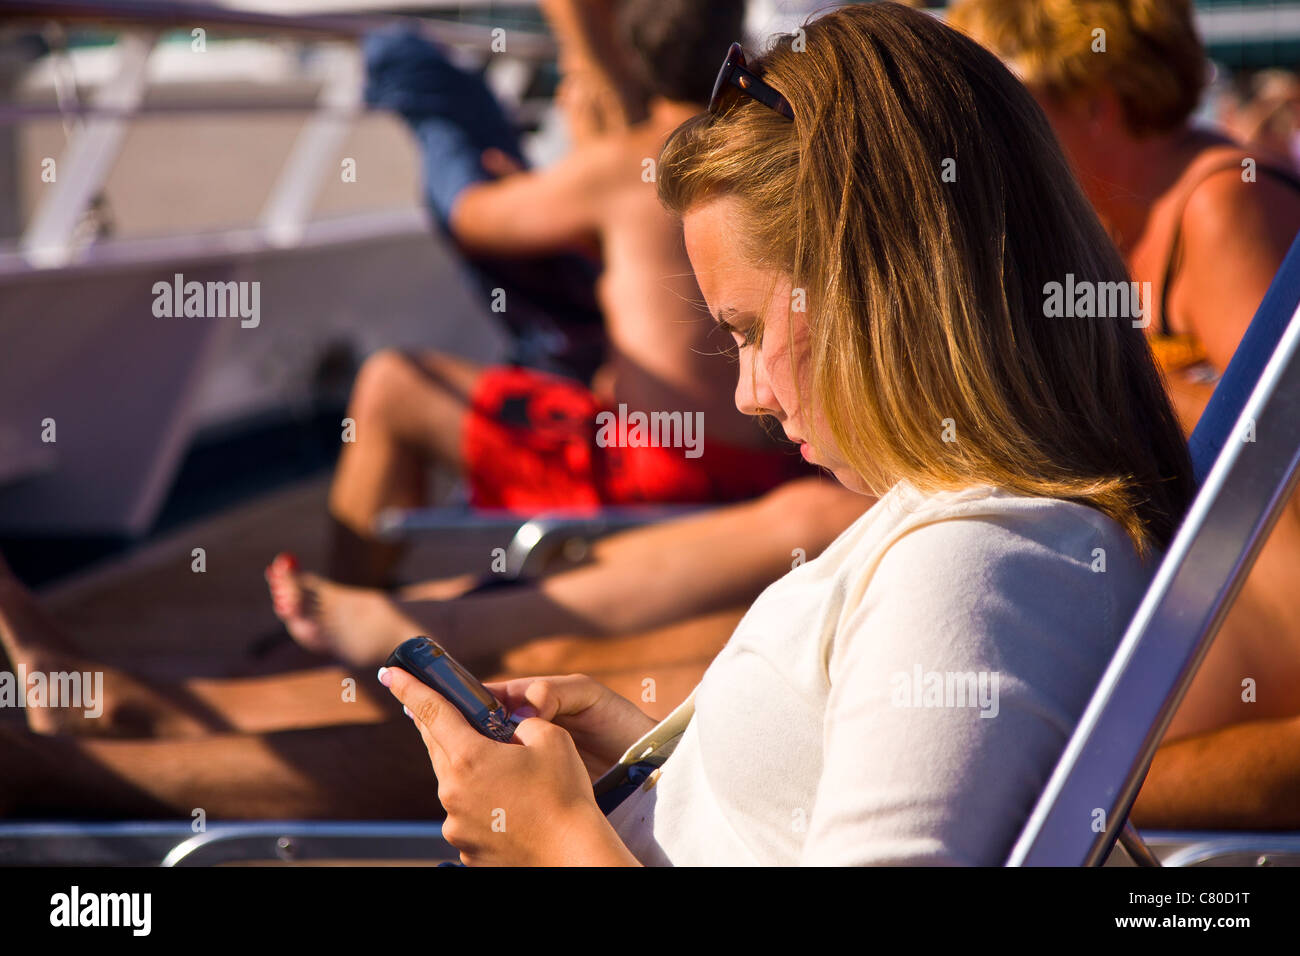 Teenage girl texting while on cruise ship Stock Photo